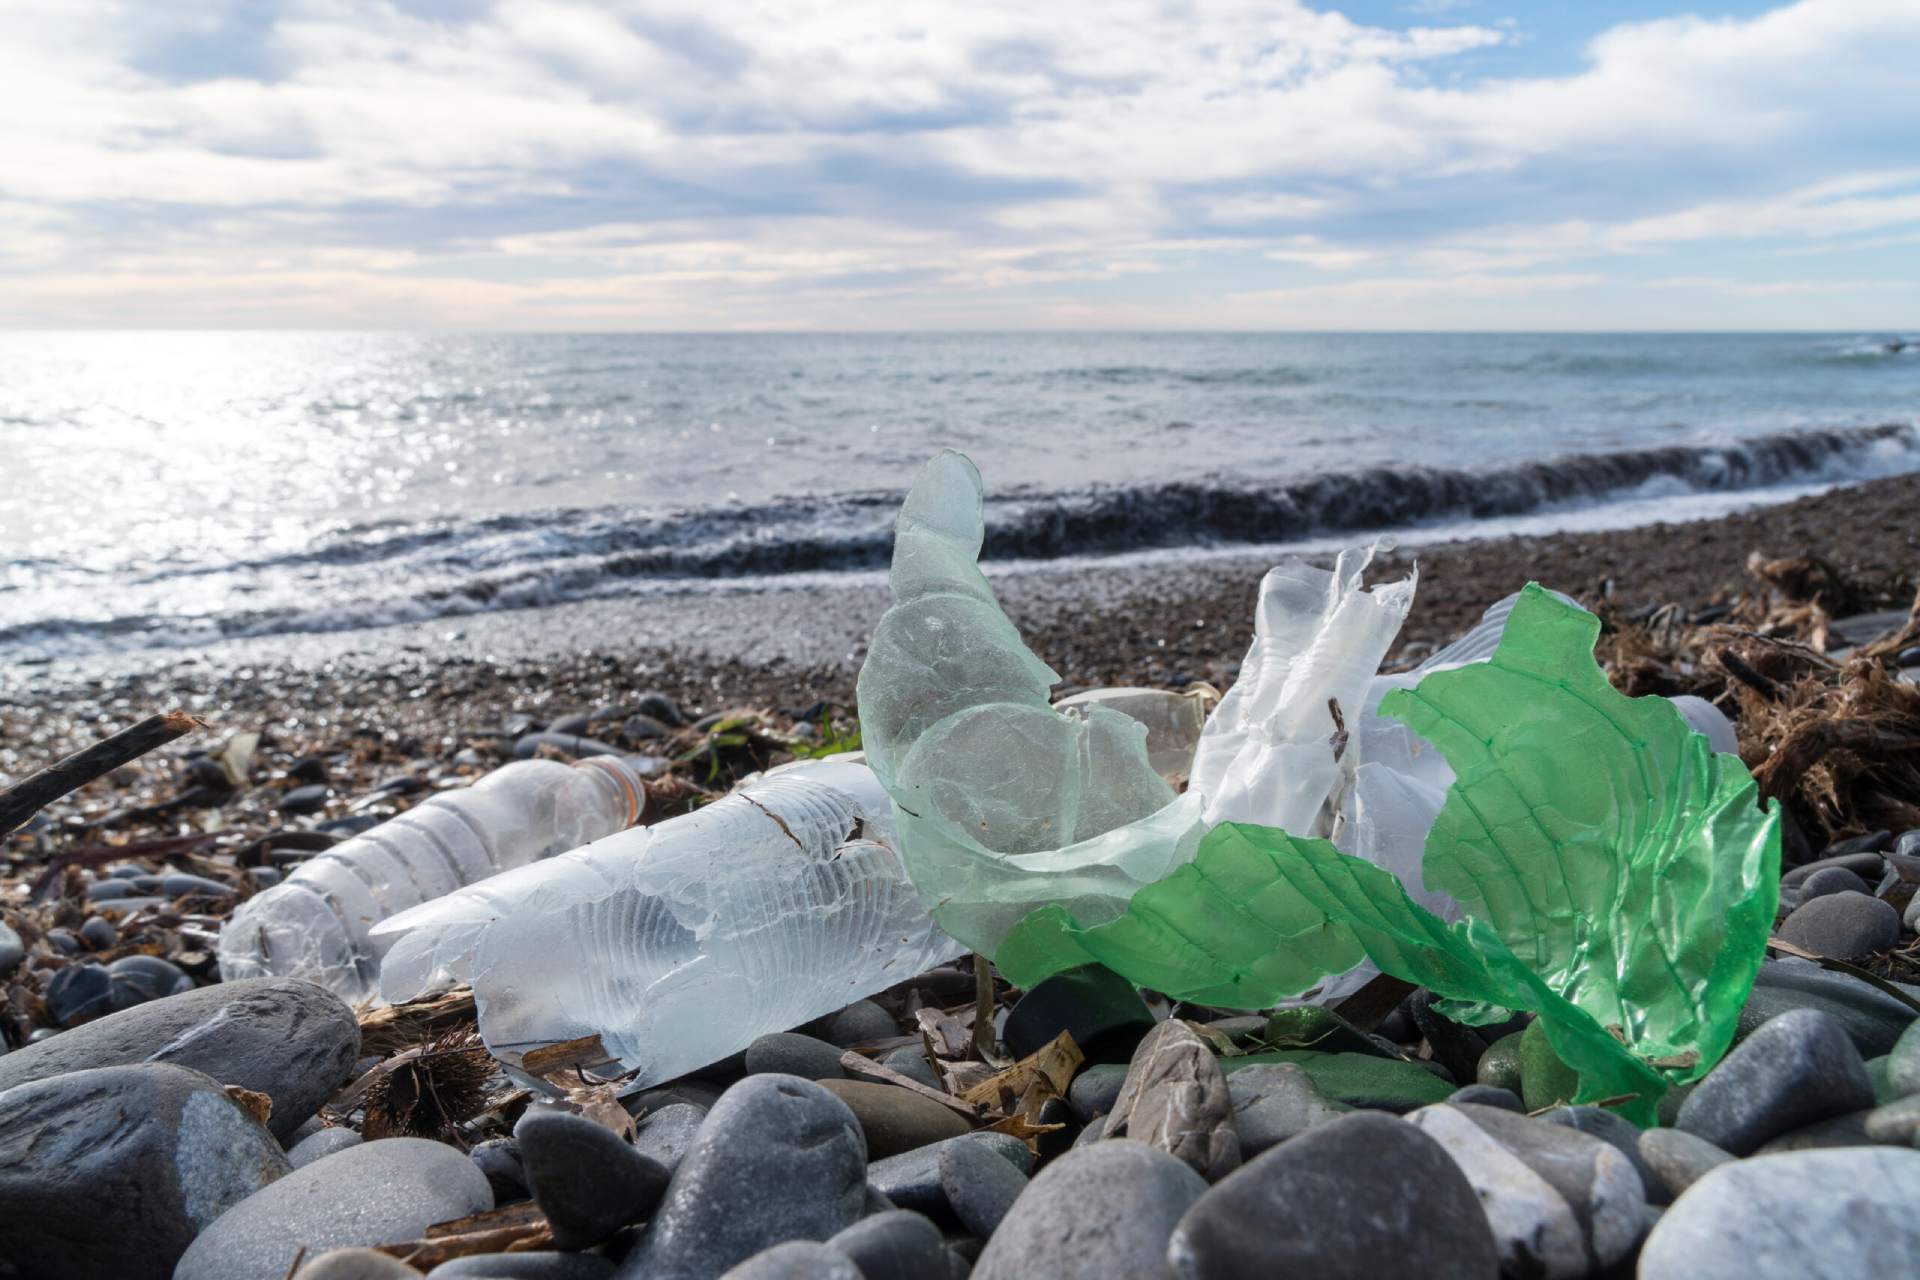 Marine pollution: plastic waste on the beach.